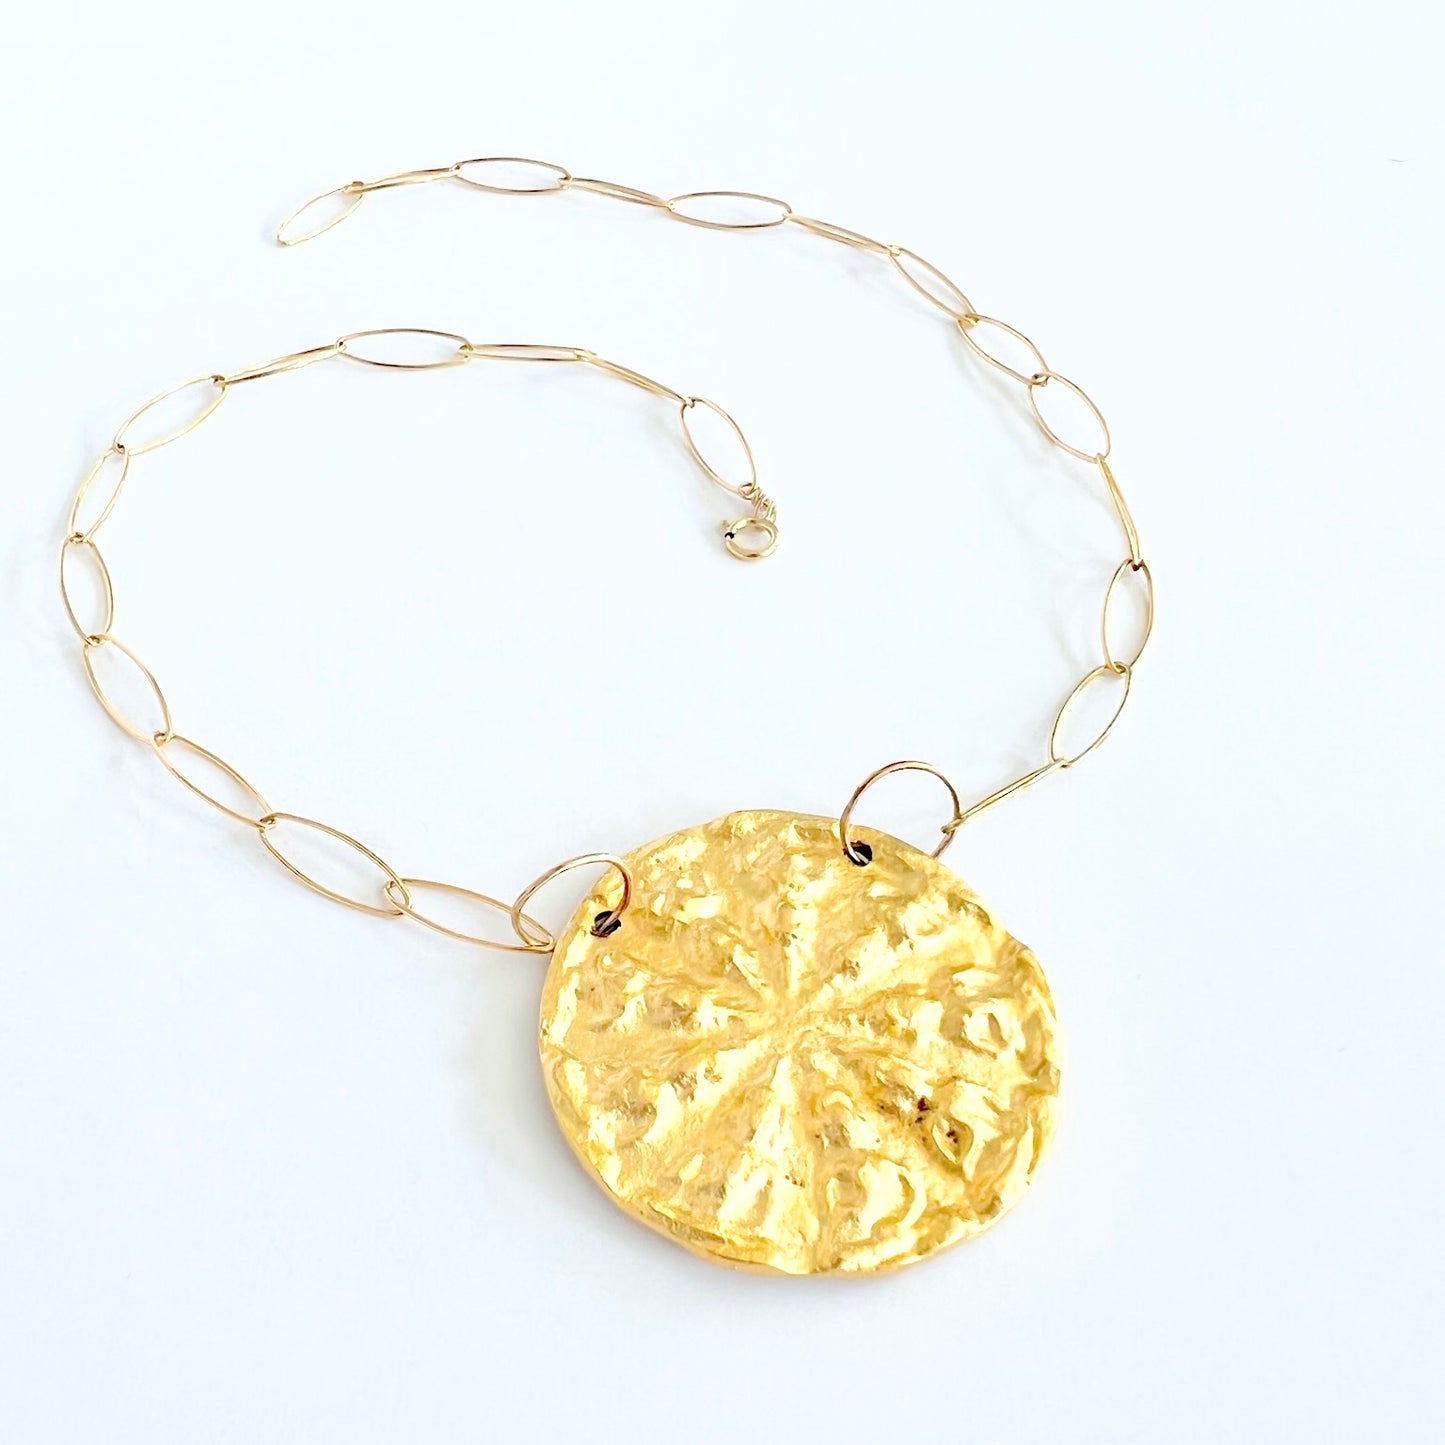 Harlow gold burst necklace